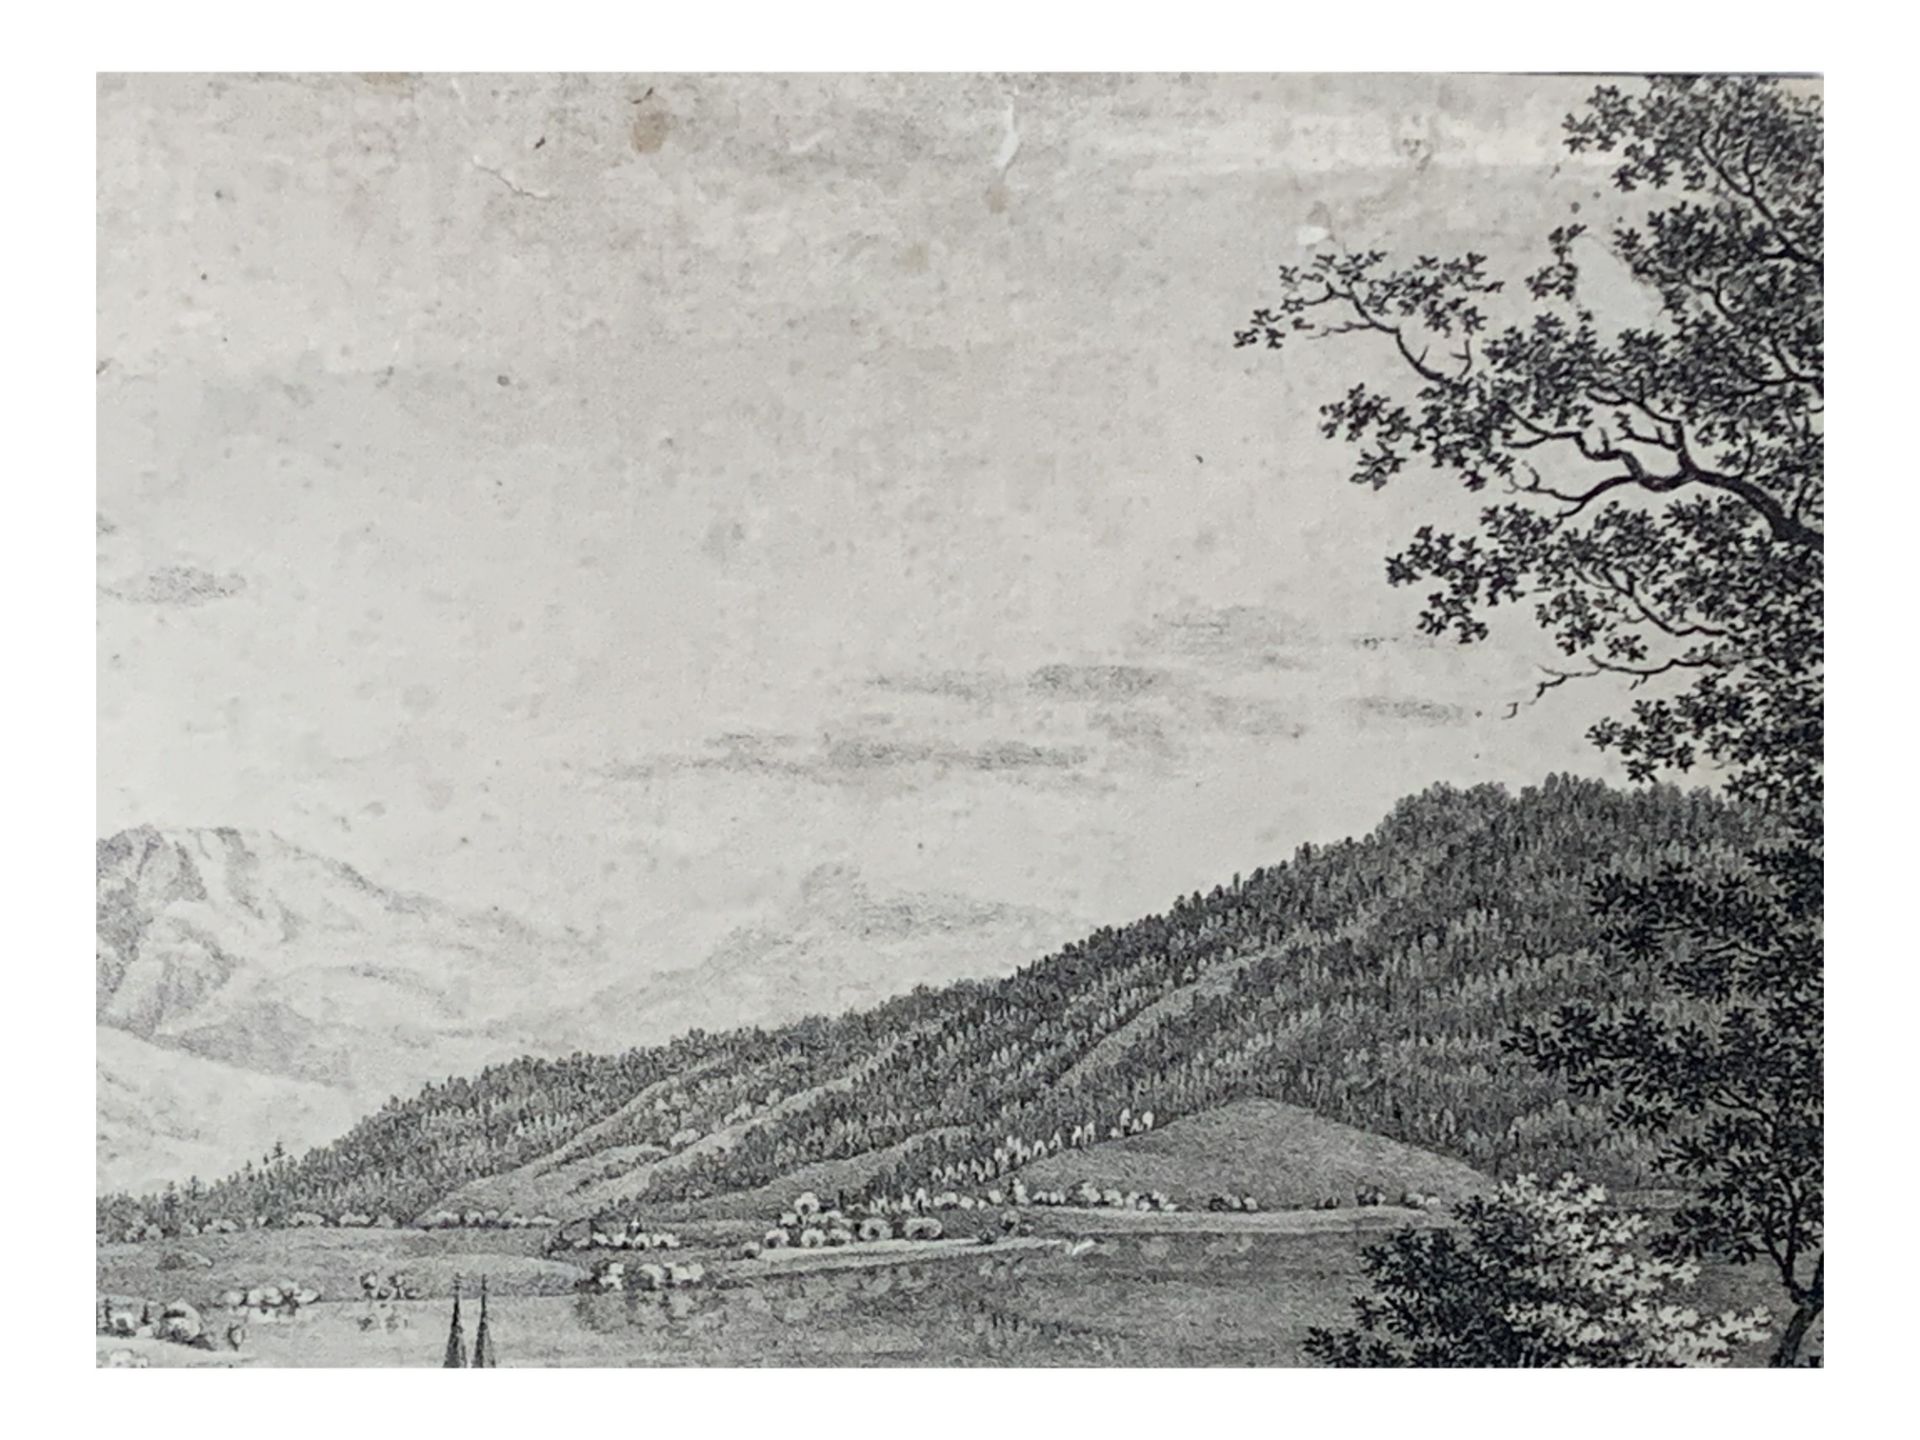 Blick auf Kloster Tegernsee - Image 6 of 6